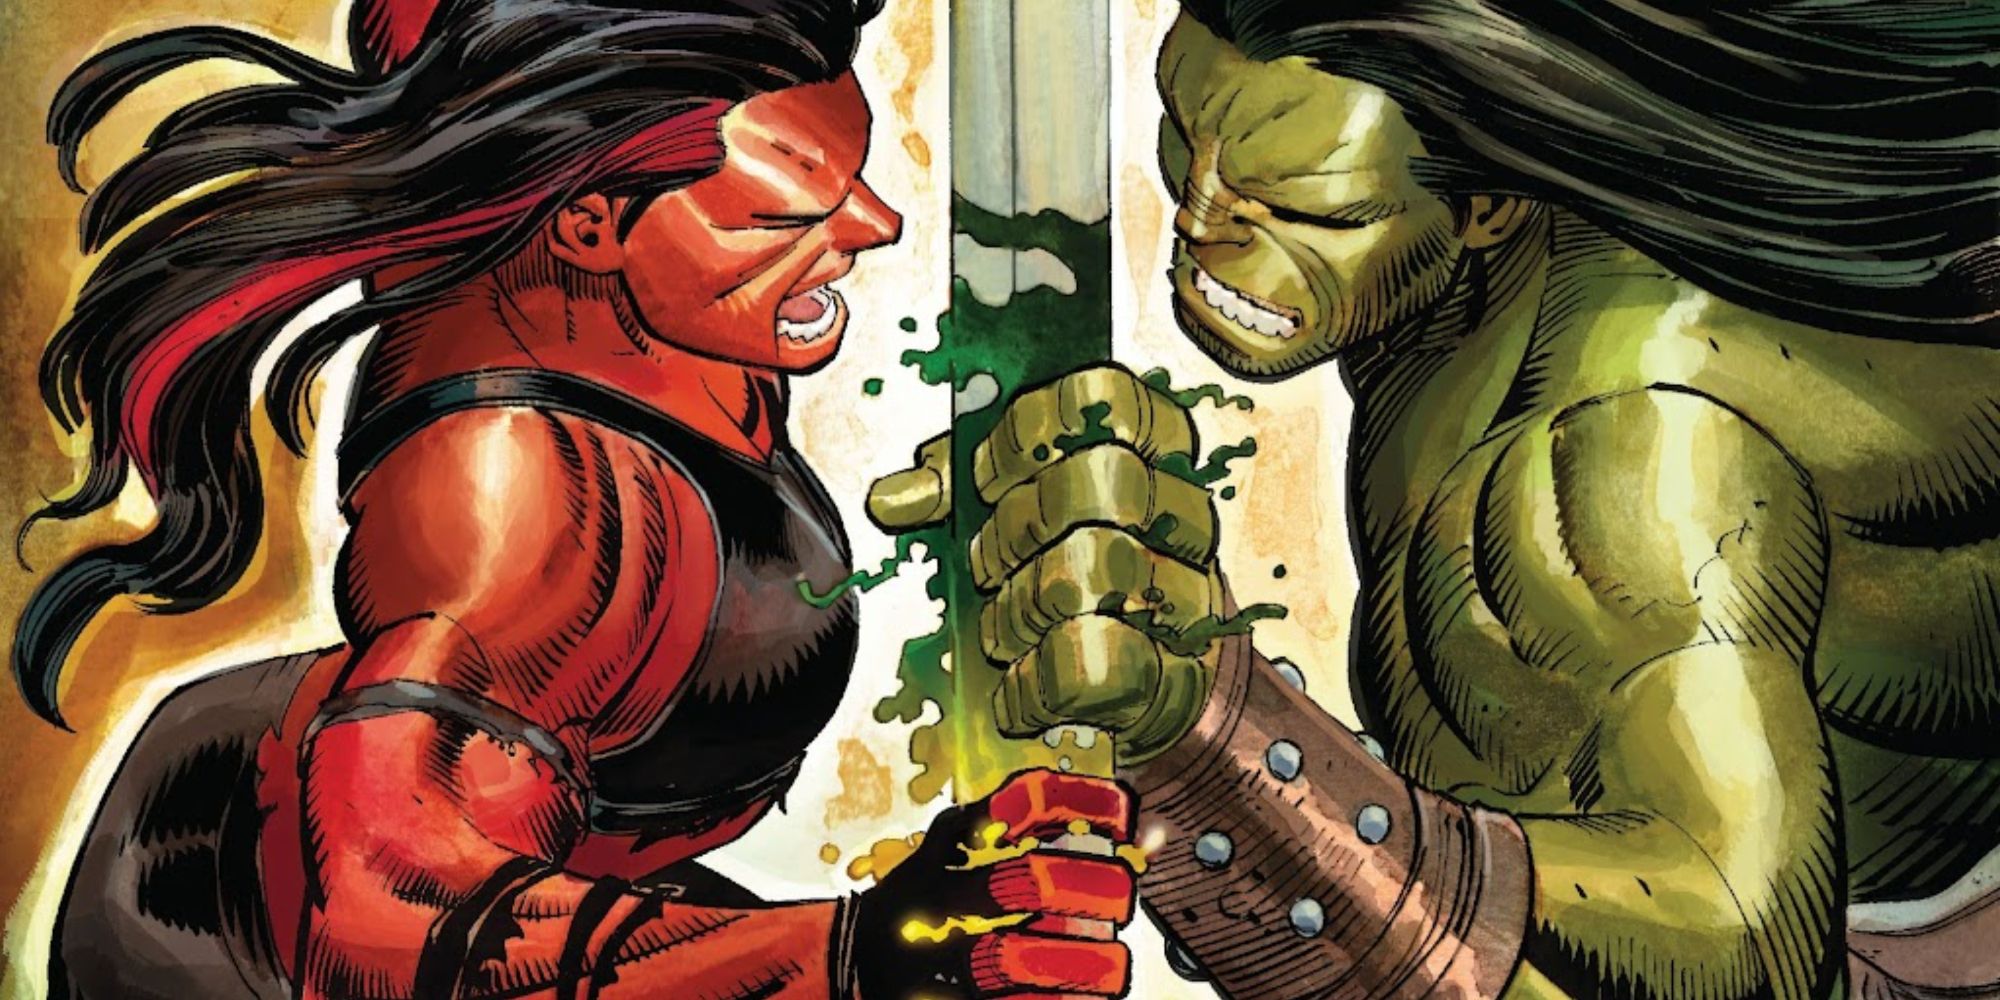 Red She-Hulk fights Skaar in Marvel Comics.